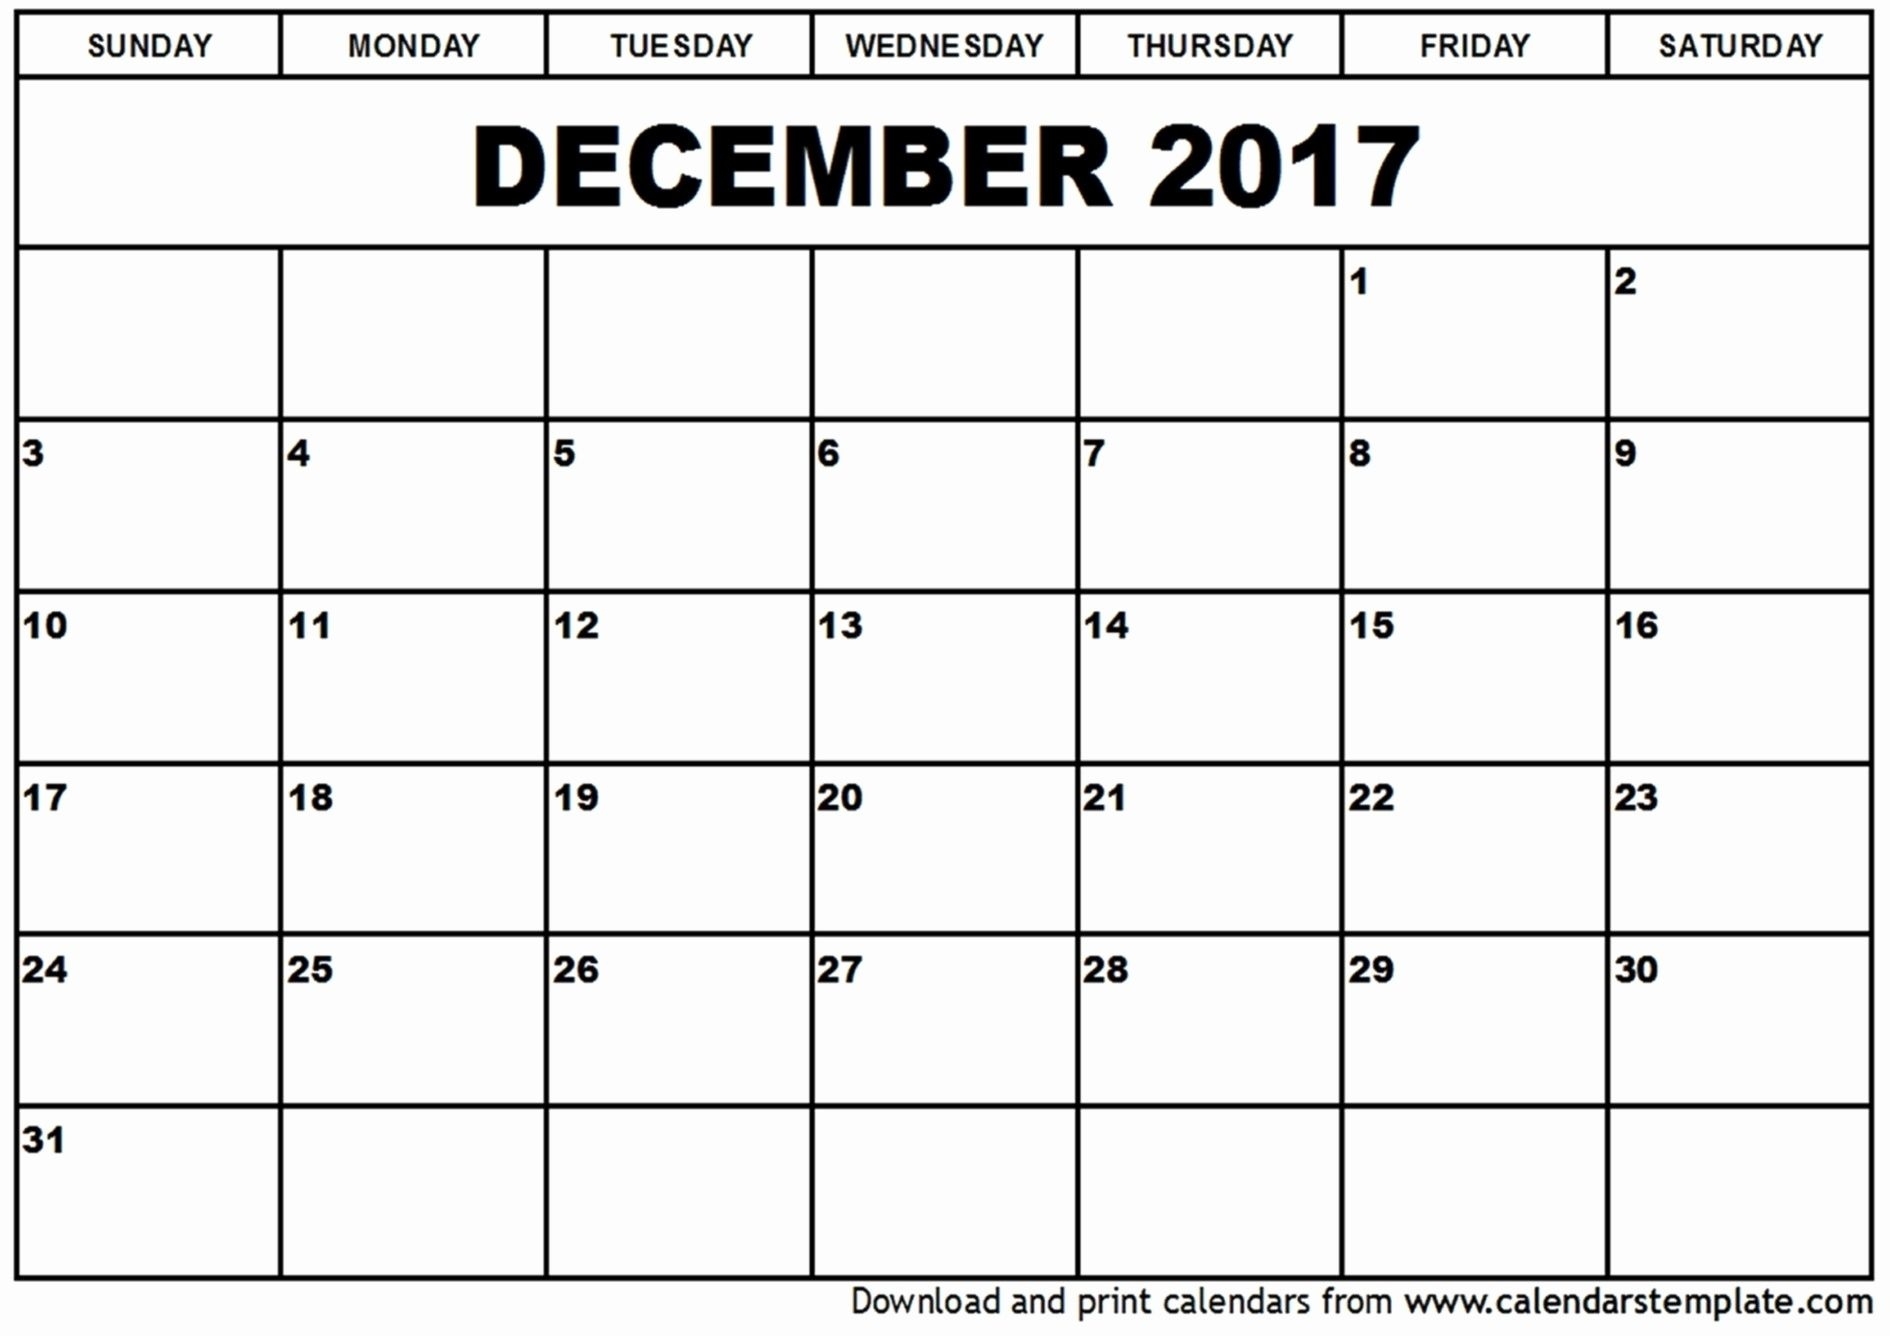 Printable Calendar I Can Type On In 2020 | Free Calendar Calendar Template Legal Size